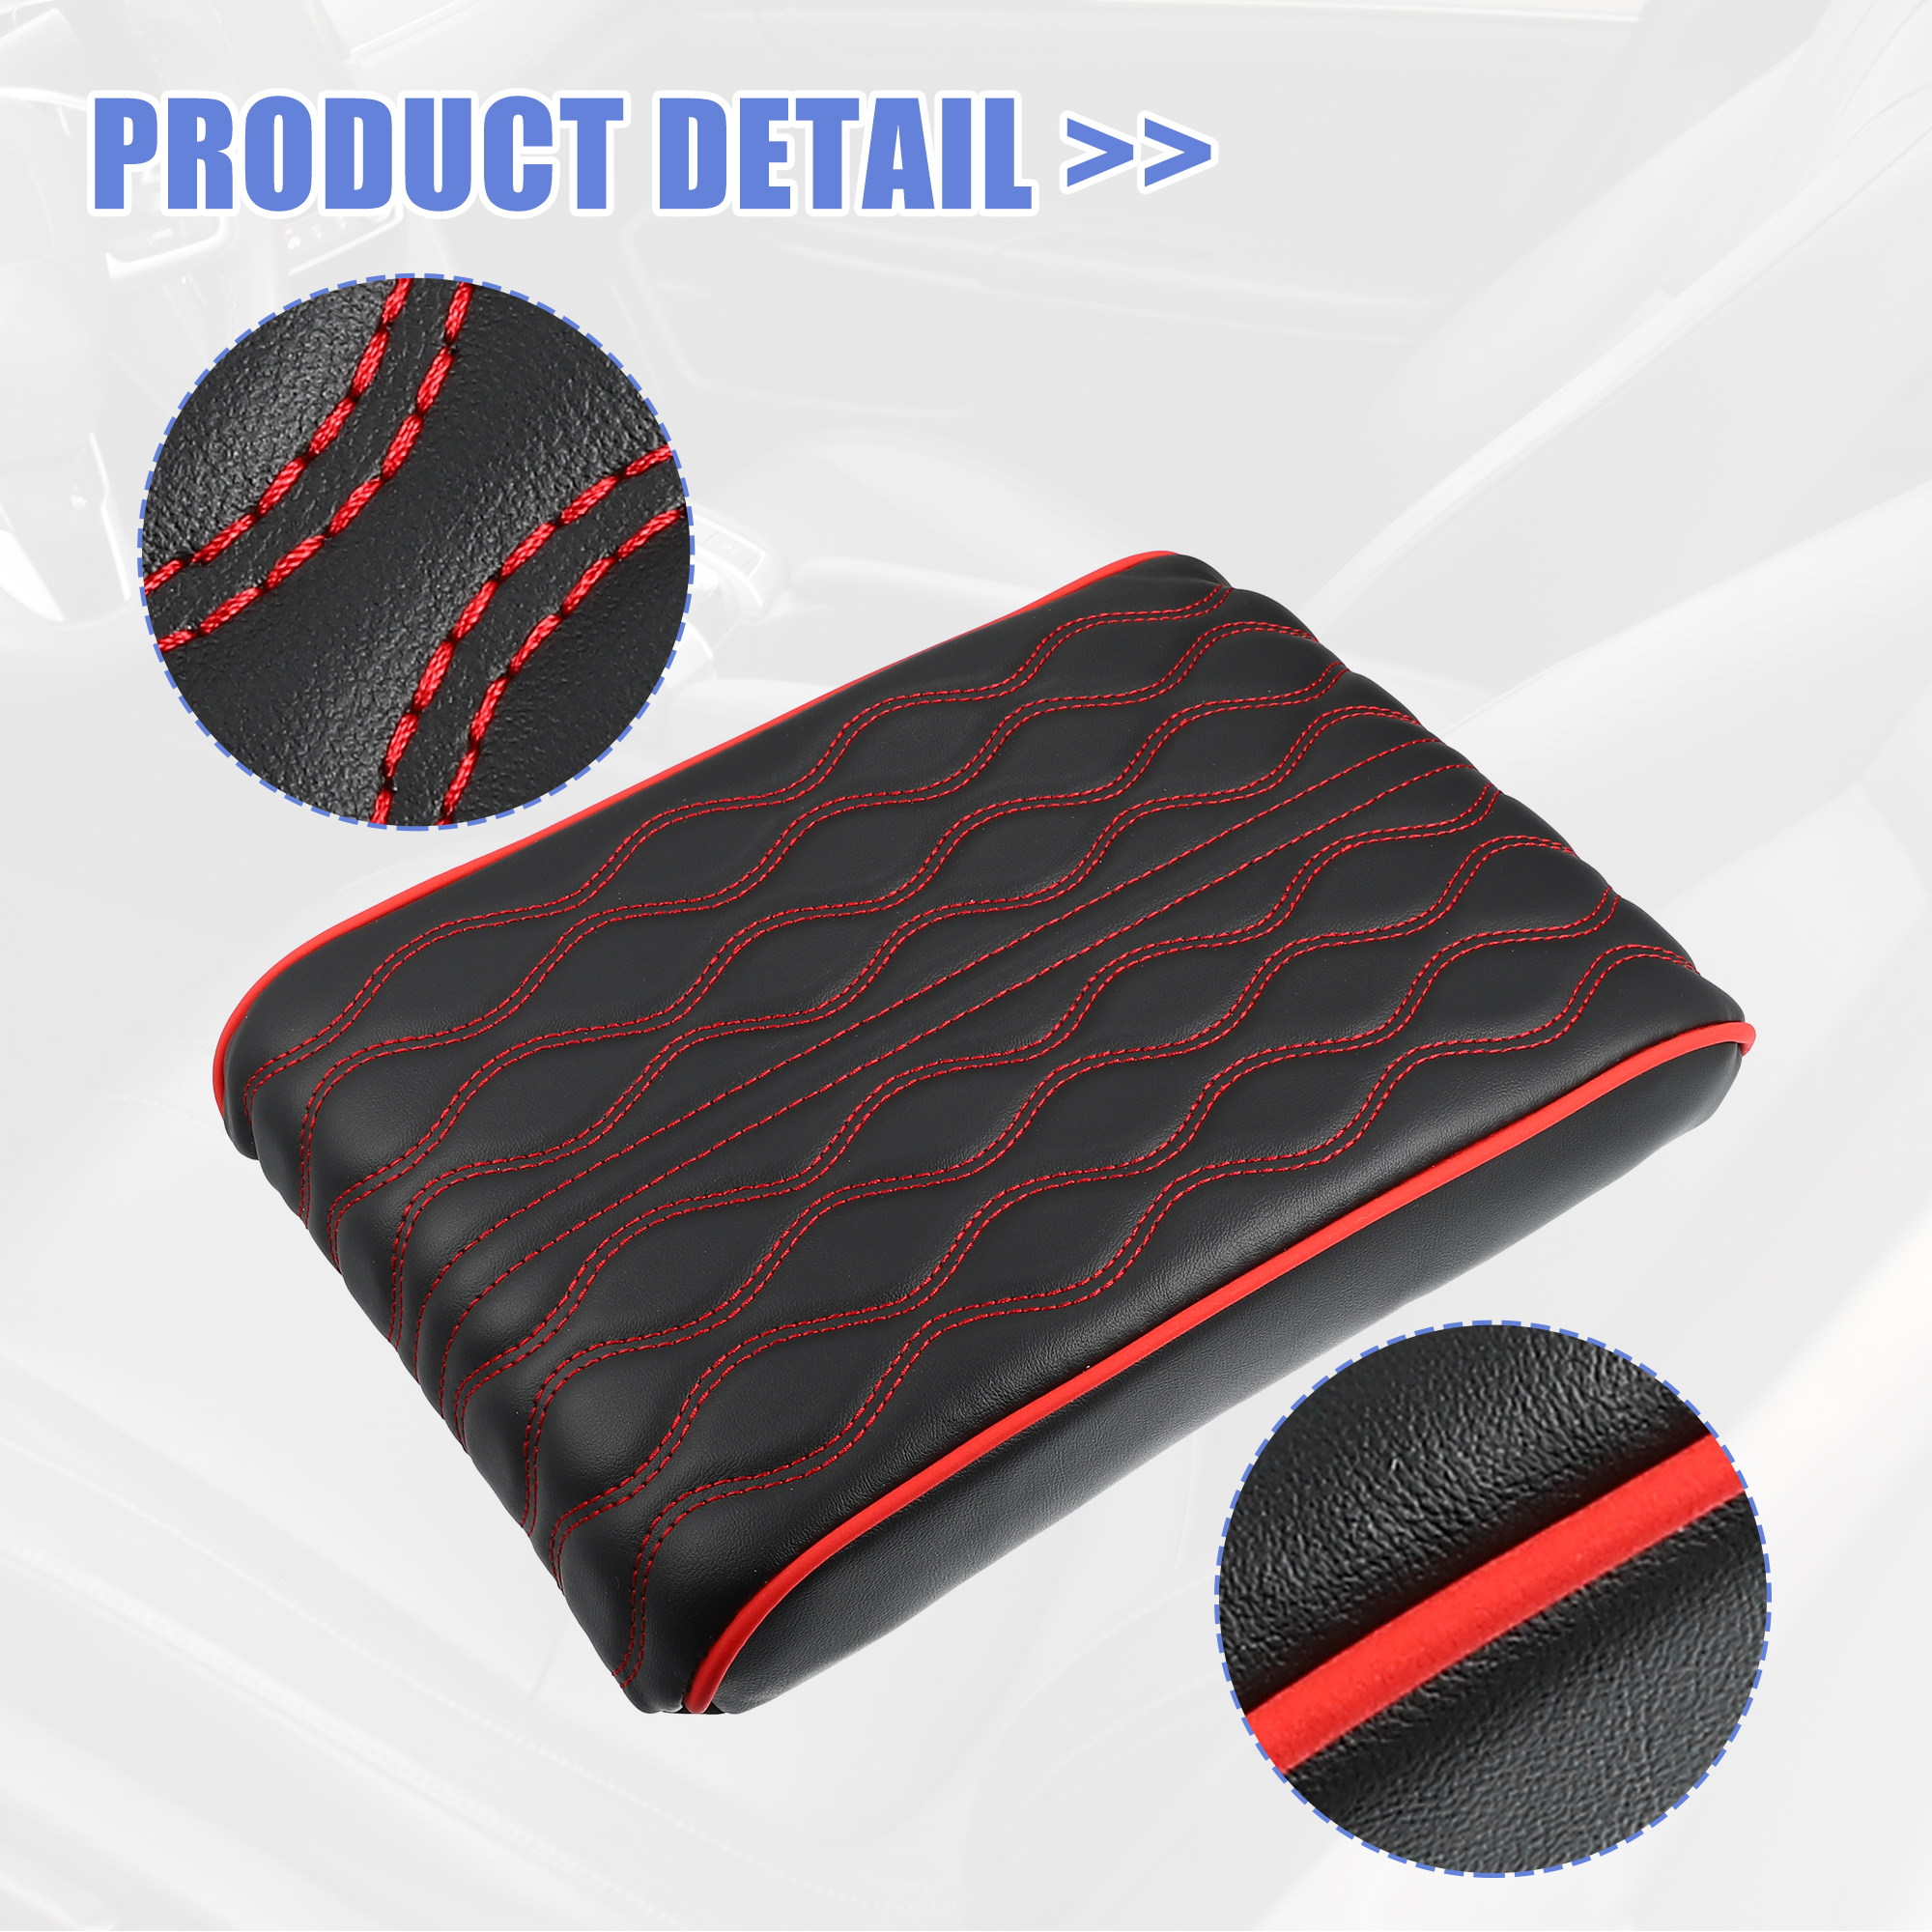 Unique Bargains Auto Car Armrest Cushion Cover Center Console Box Pads Waterproof Black Red